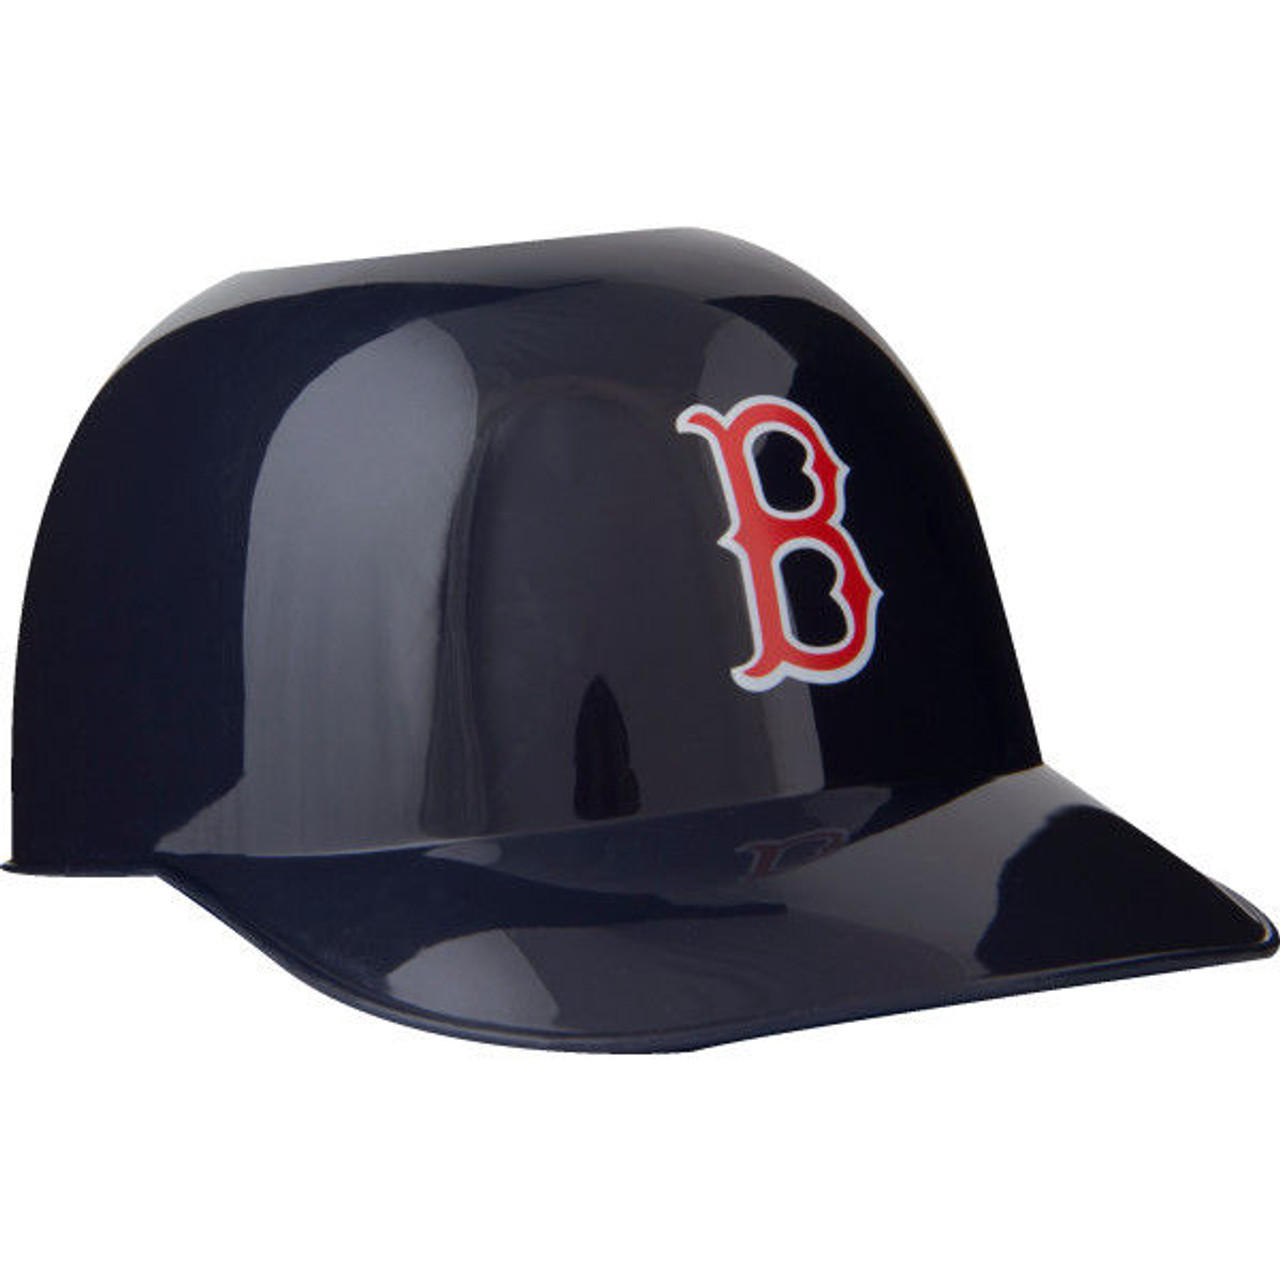 Set of 20 Boston Red Sox 8oz Ice Cream Sundae Baseball Helmet Snack Bowls